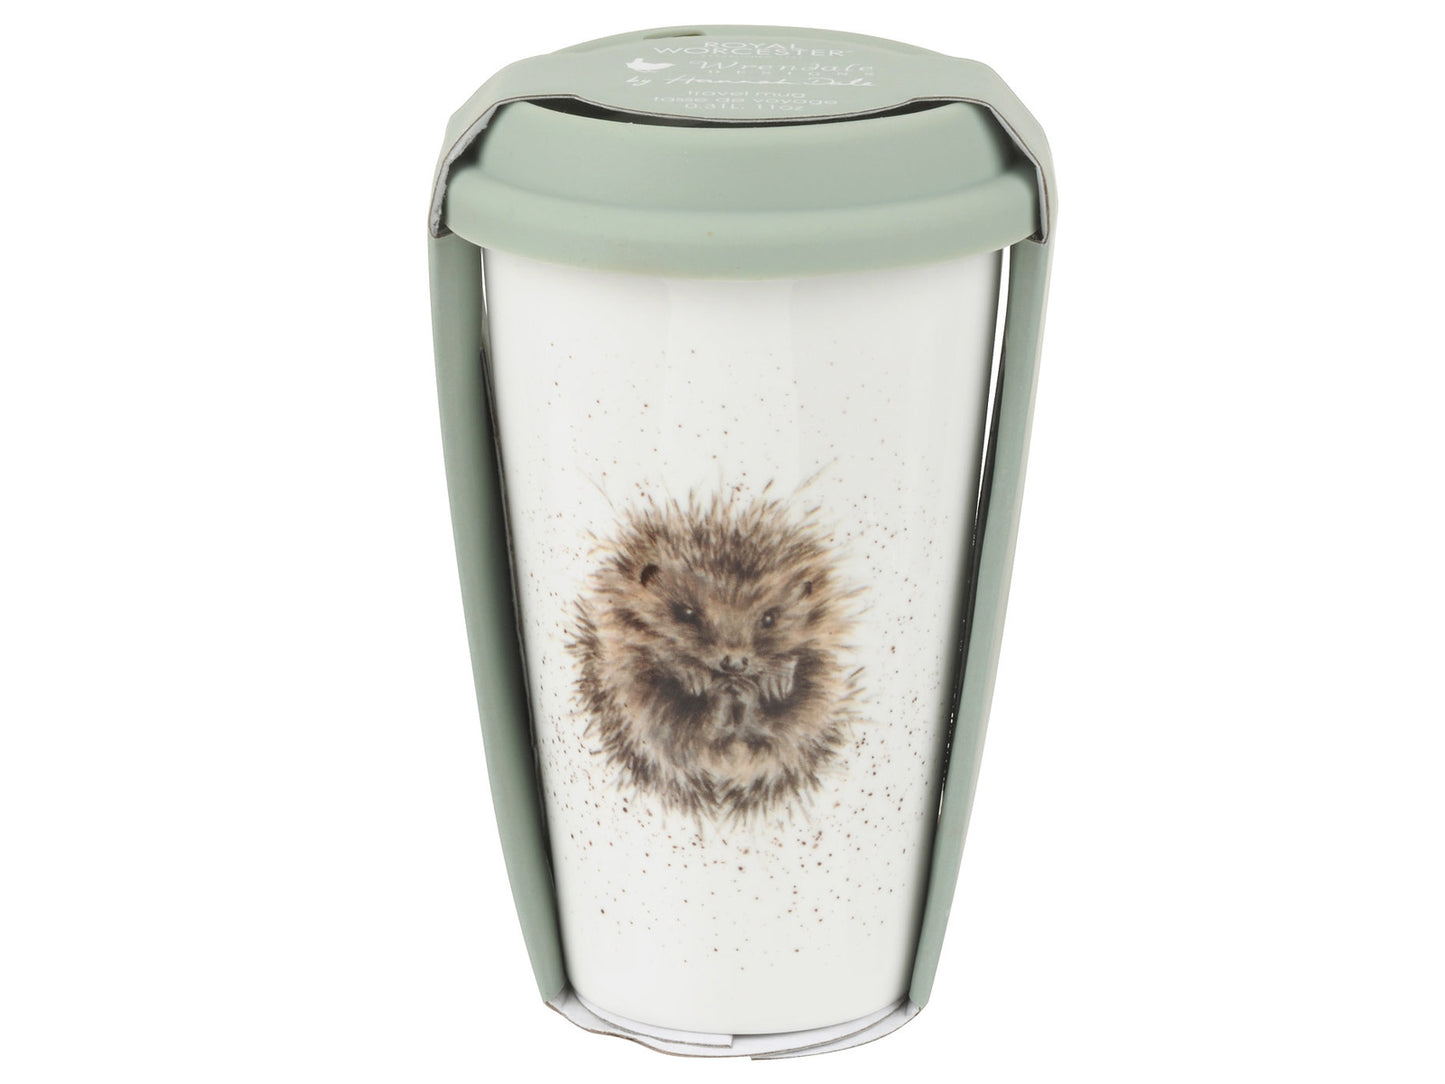 A white porcelain travel mug with a hedgehog design and a light green silicone lid